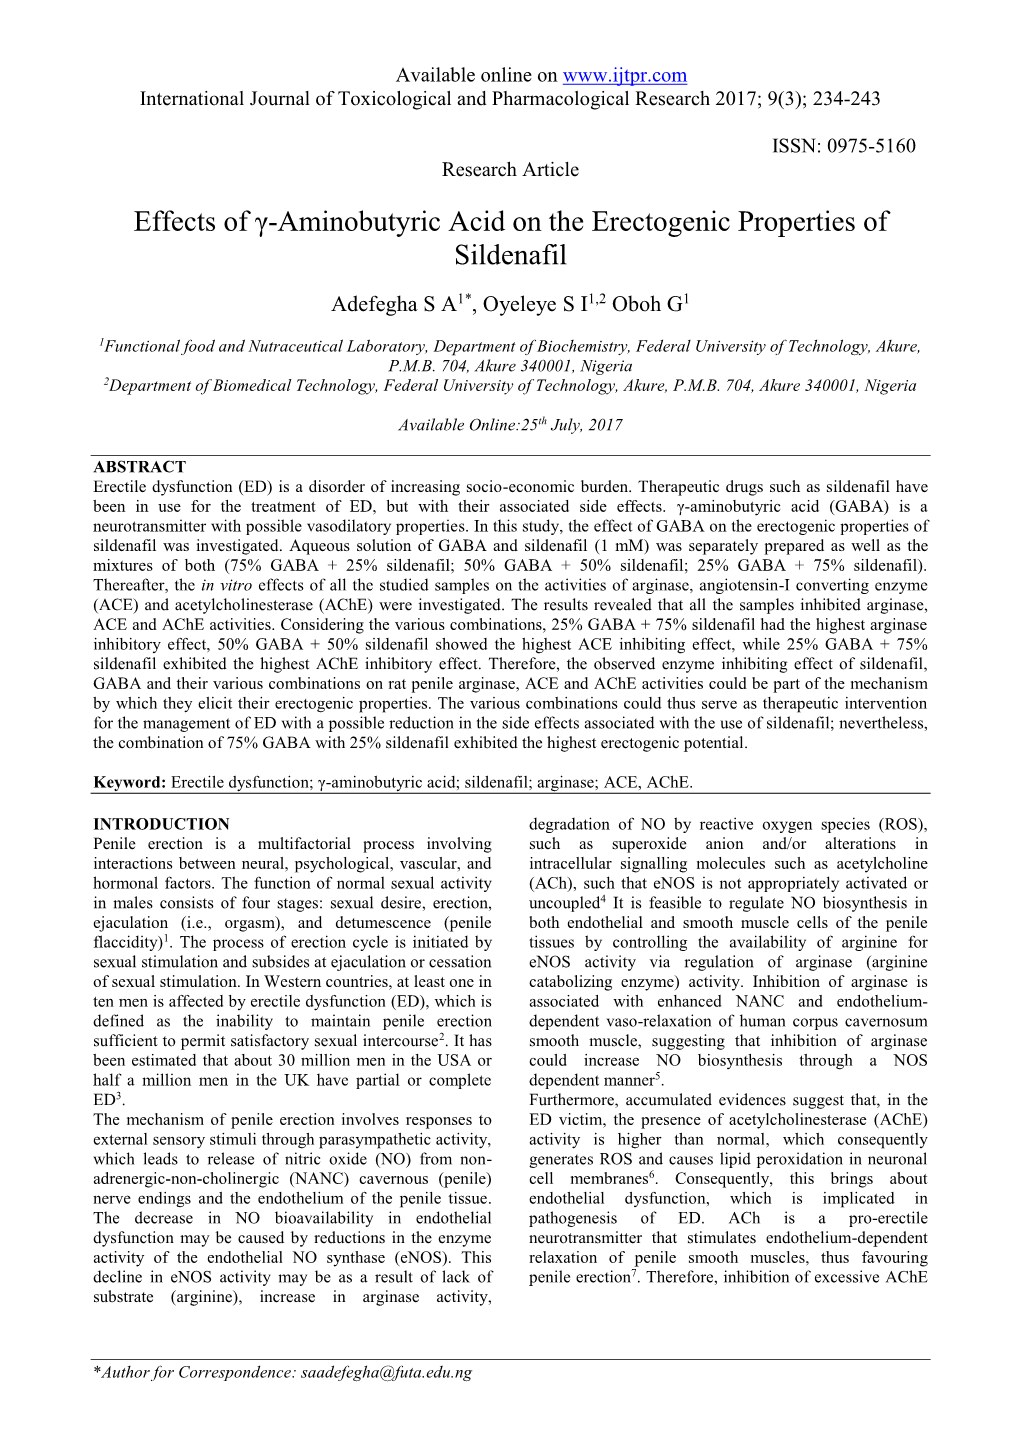 Effects of Γ-Aminobutyric Acid on the Erectogenic Properties of Sildenafil